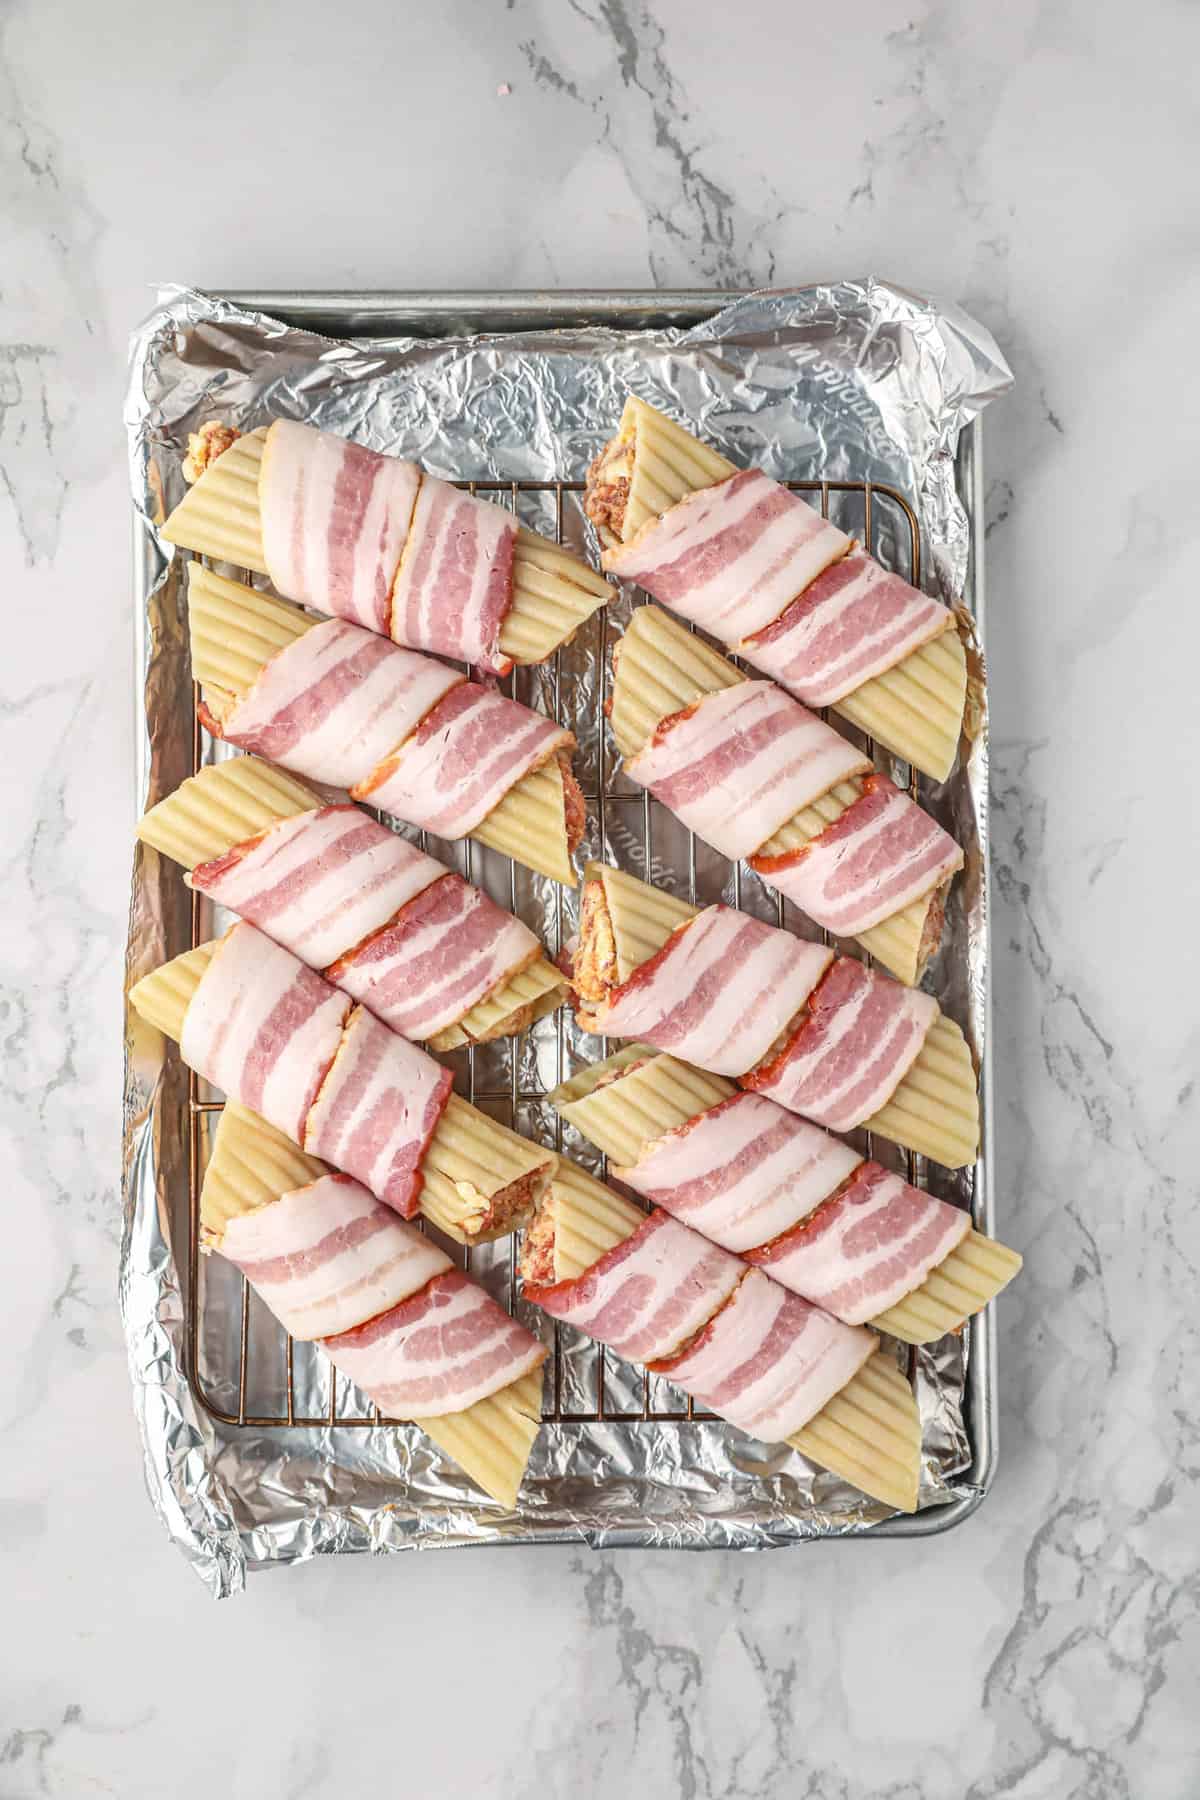 Wrapping shells with bacon for Smoked Shotgun Shells